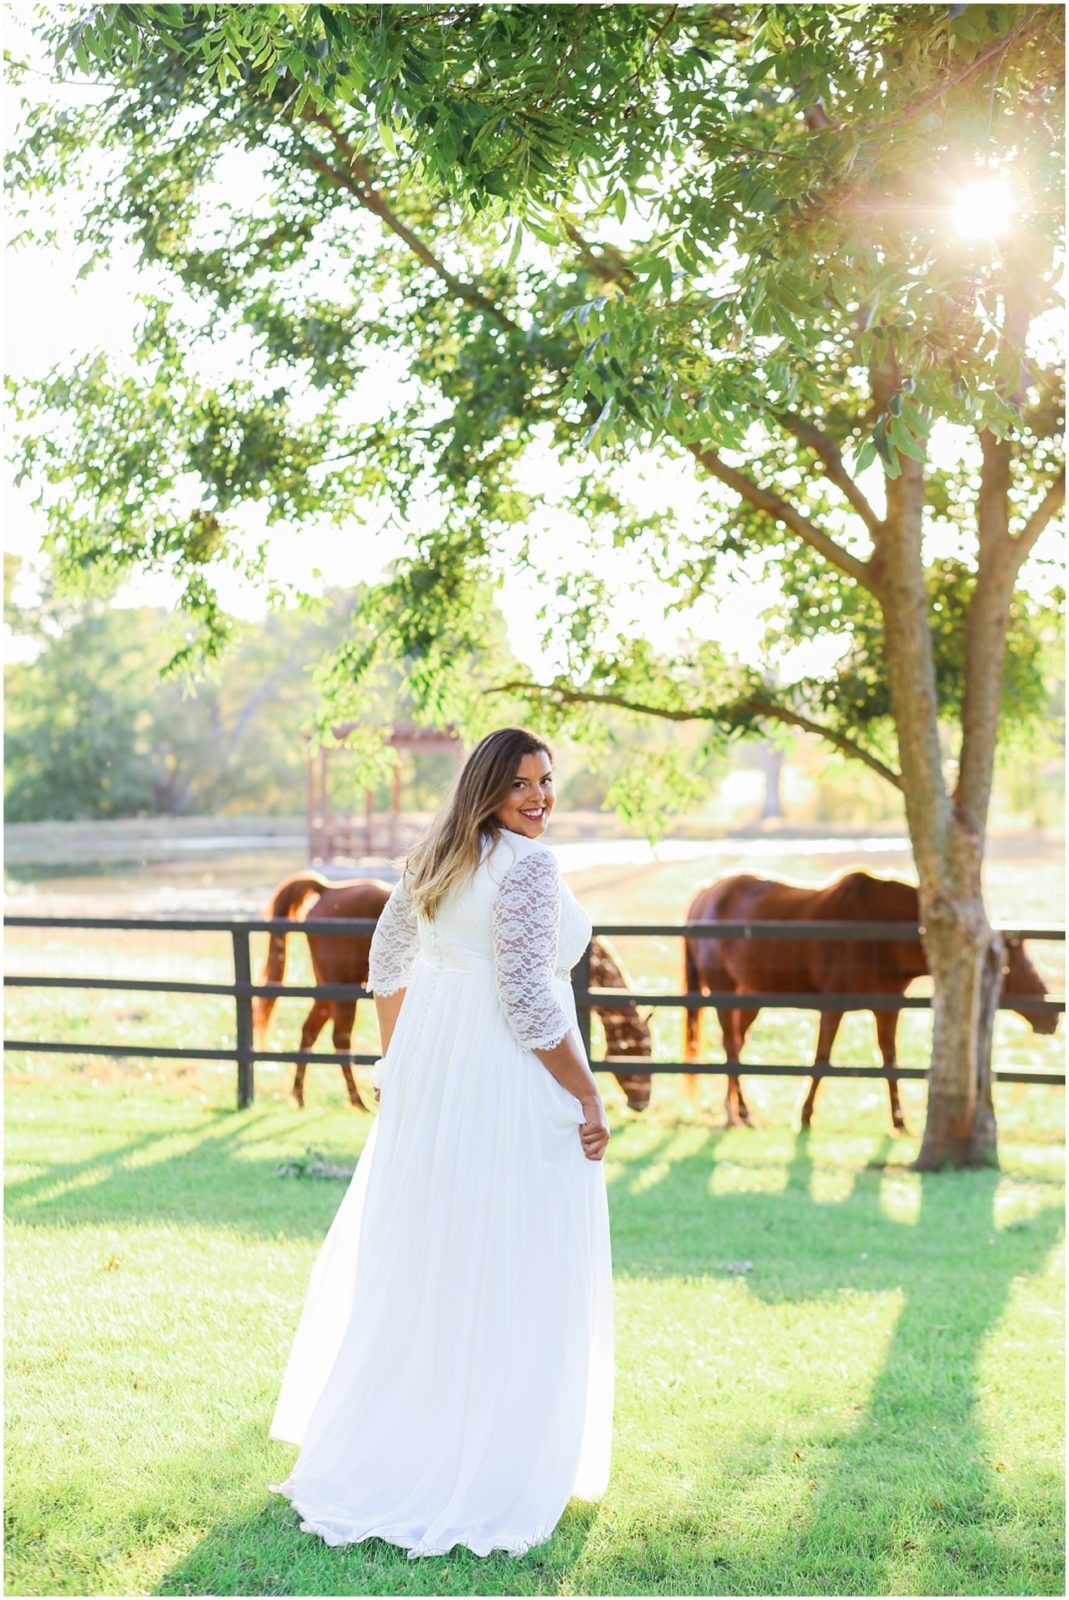 Tropical Wedding Details - Mariam Saifan Photography - Kansas City Overland Park Portrait and Wedding Photographer 